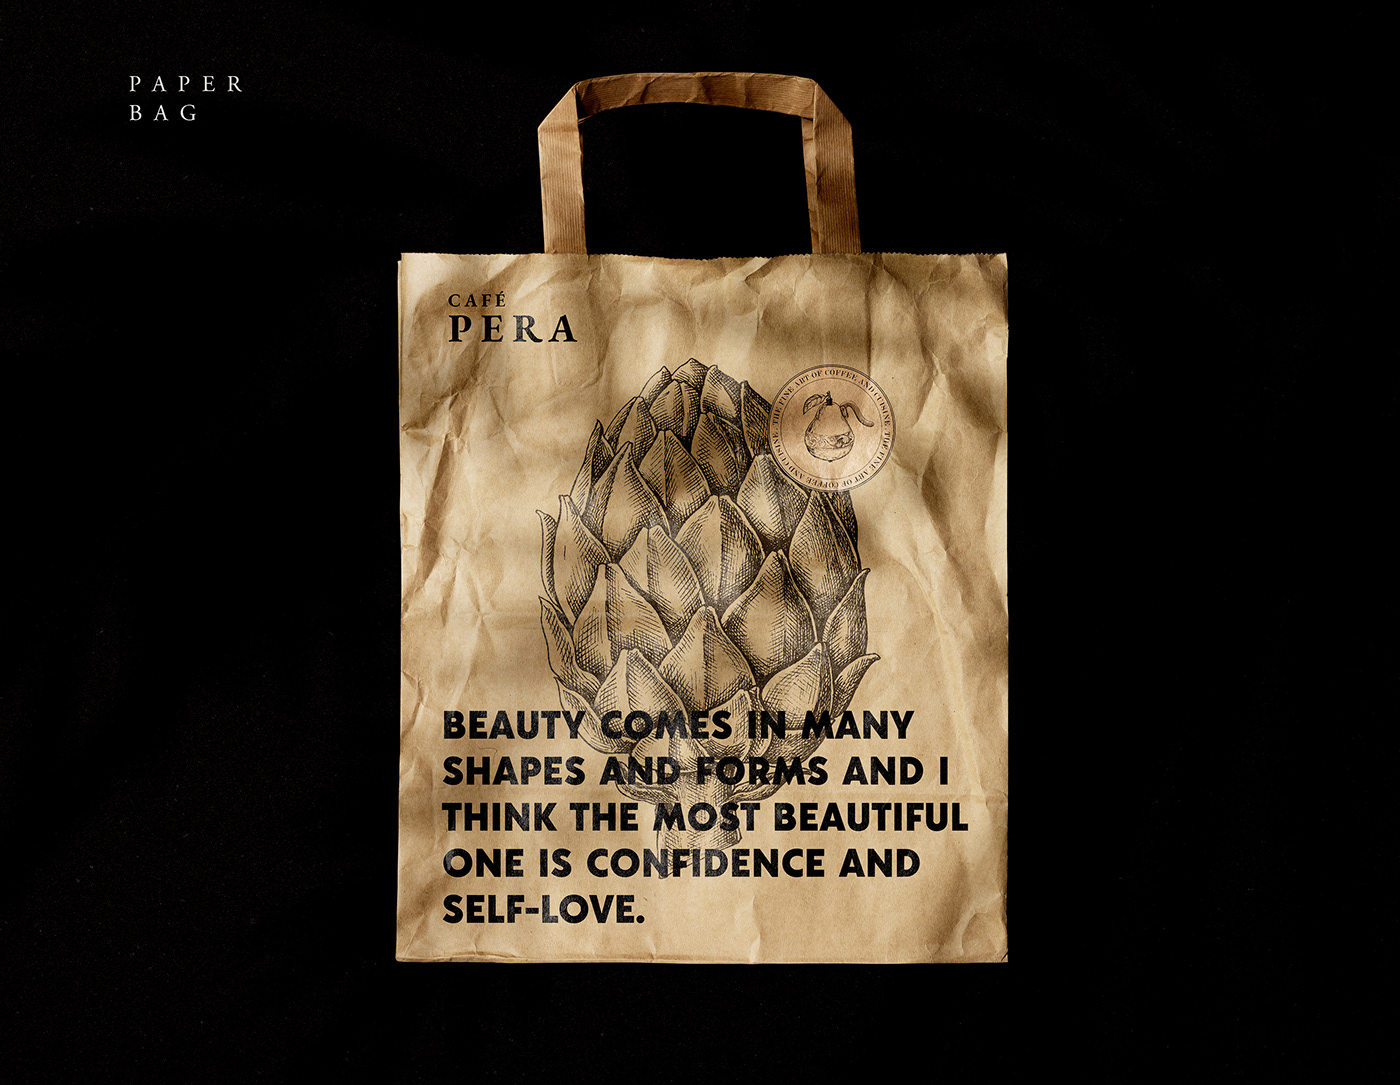 paper bag
eco bag
shopping bag
craft
craft design
black and white
phrase
sticker
craft bag
packaging